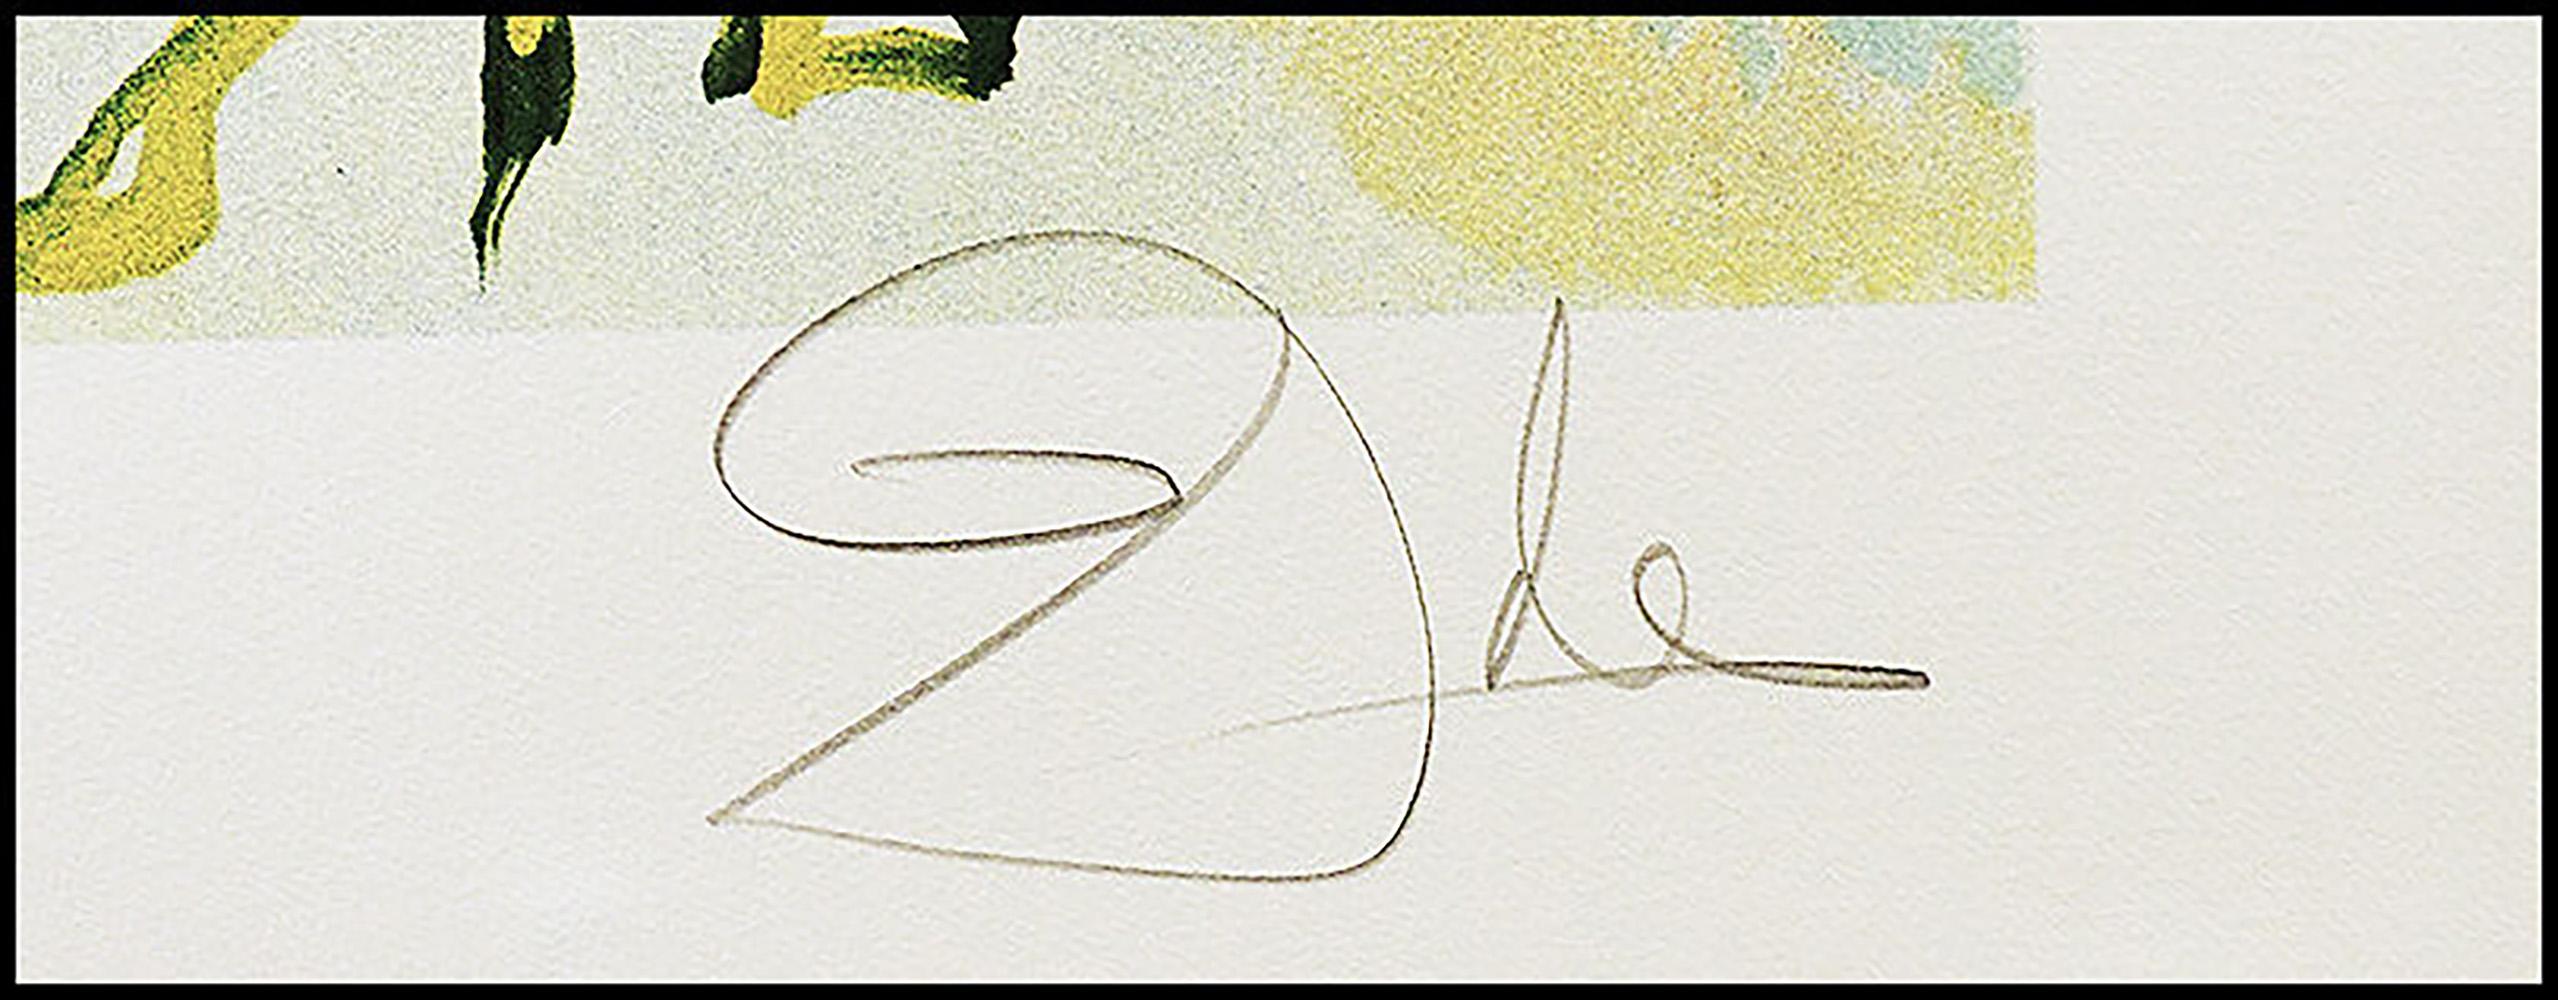 Salvador Dali Color Lithograph Hand Signed Original Surreal Authentic Artwork - Surrealist Print by Salvador Dalí